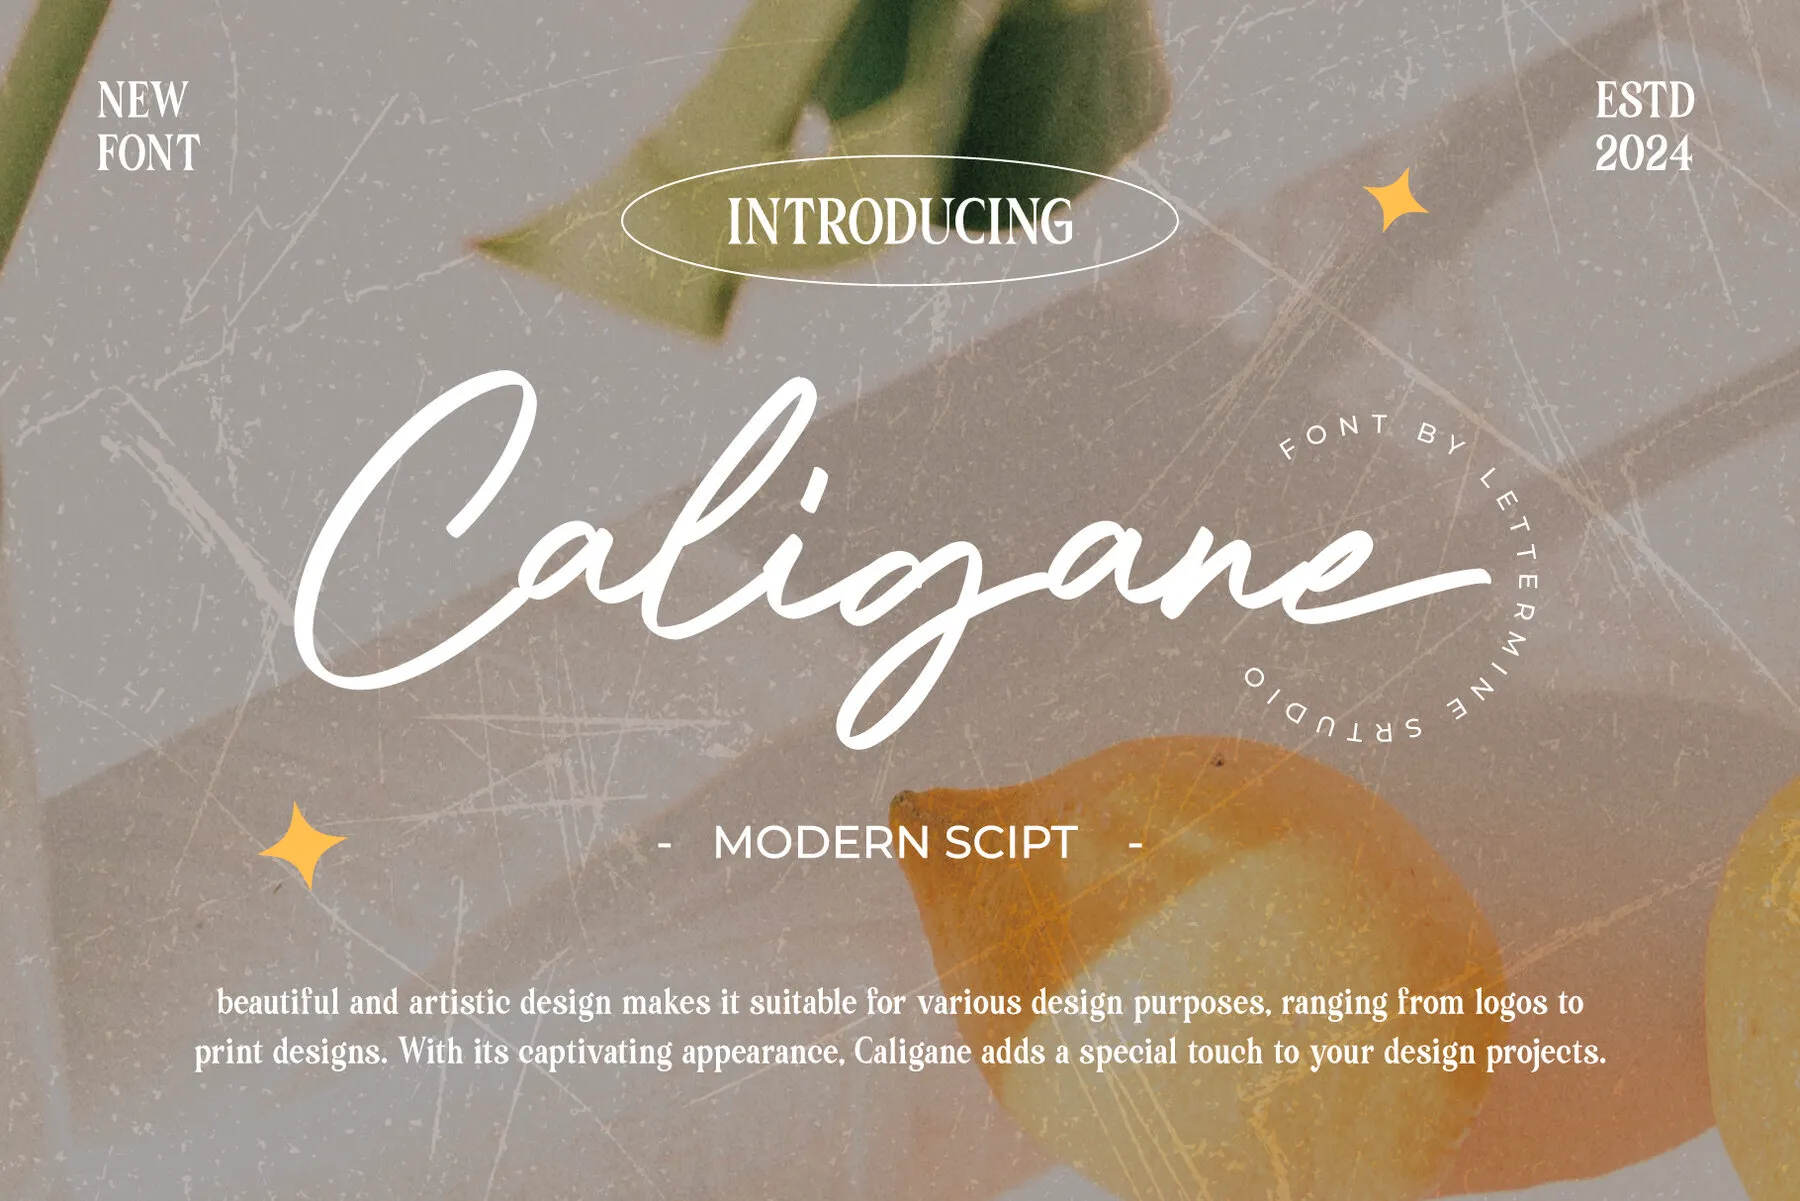 Caligane